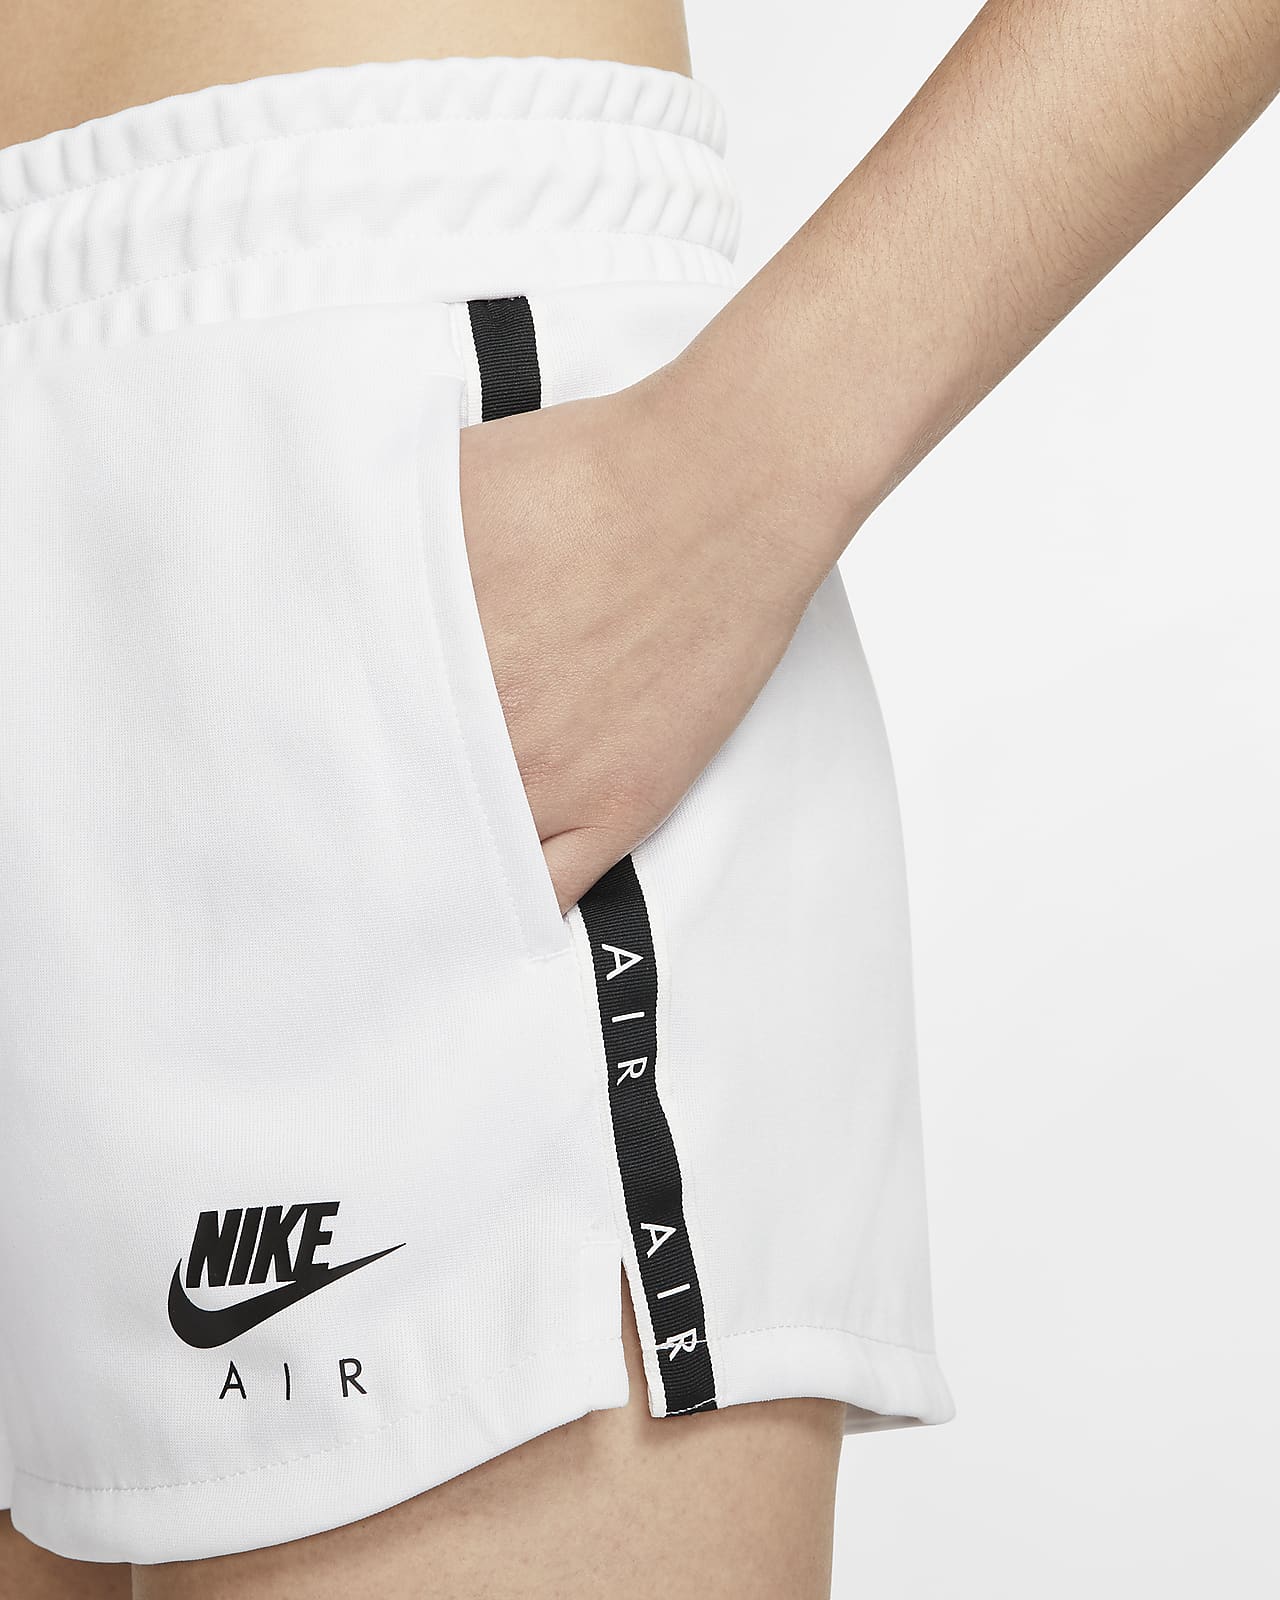 nike air max 27 with shorts